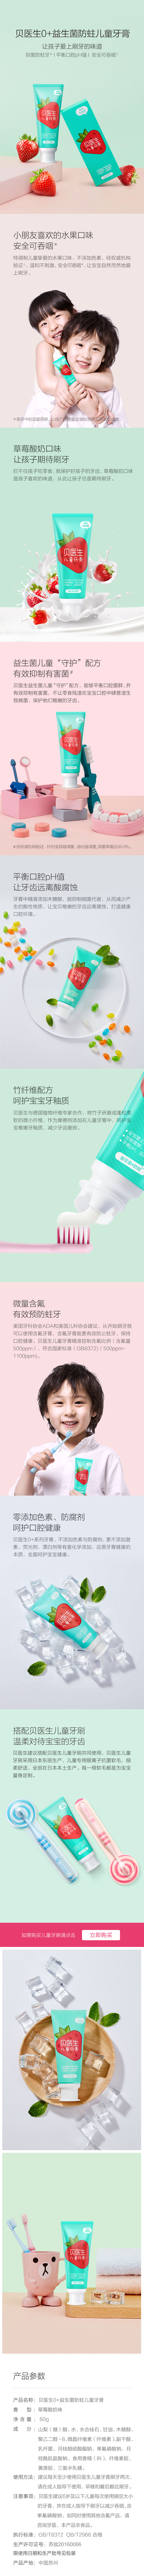 DR.BEI 0+ Probiotics Anti-Cavity Children Toothpaste (Strawberry Yogurt) Xiaomi Youpin DR·BEI 0+ Toothpaste for Children Anti Cavity And Nice Tasting for Children to Love Brushing Teeth